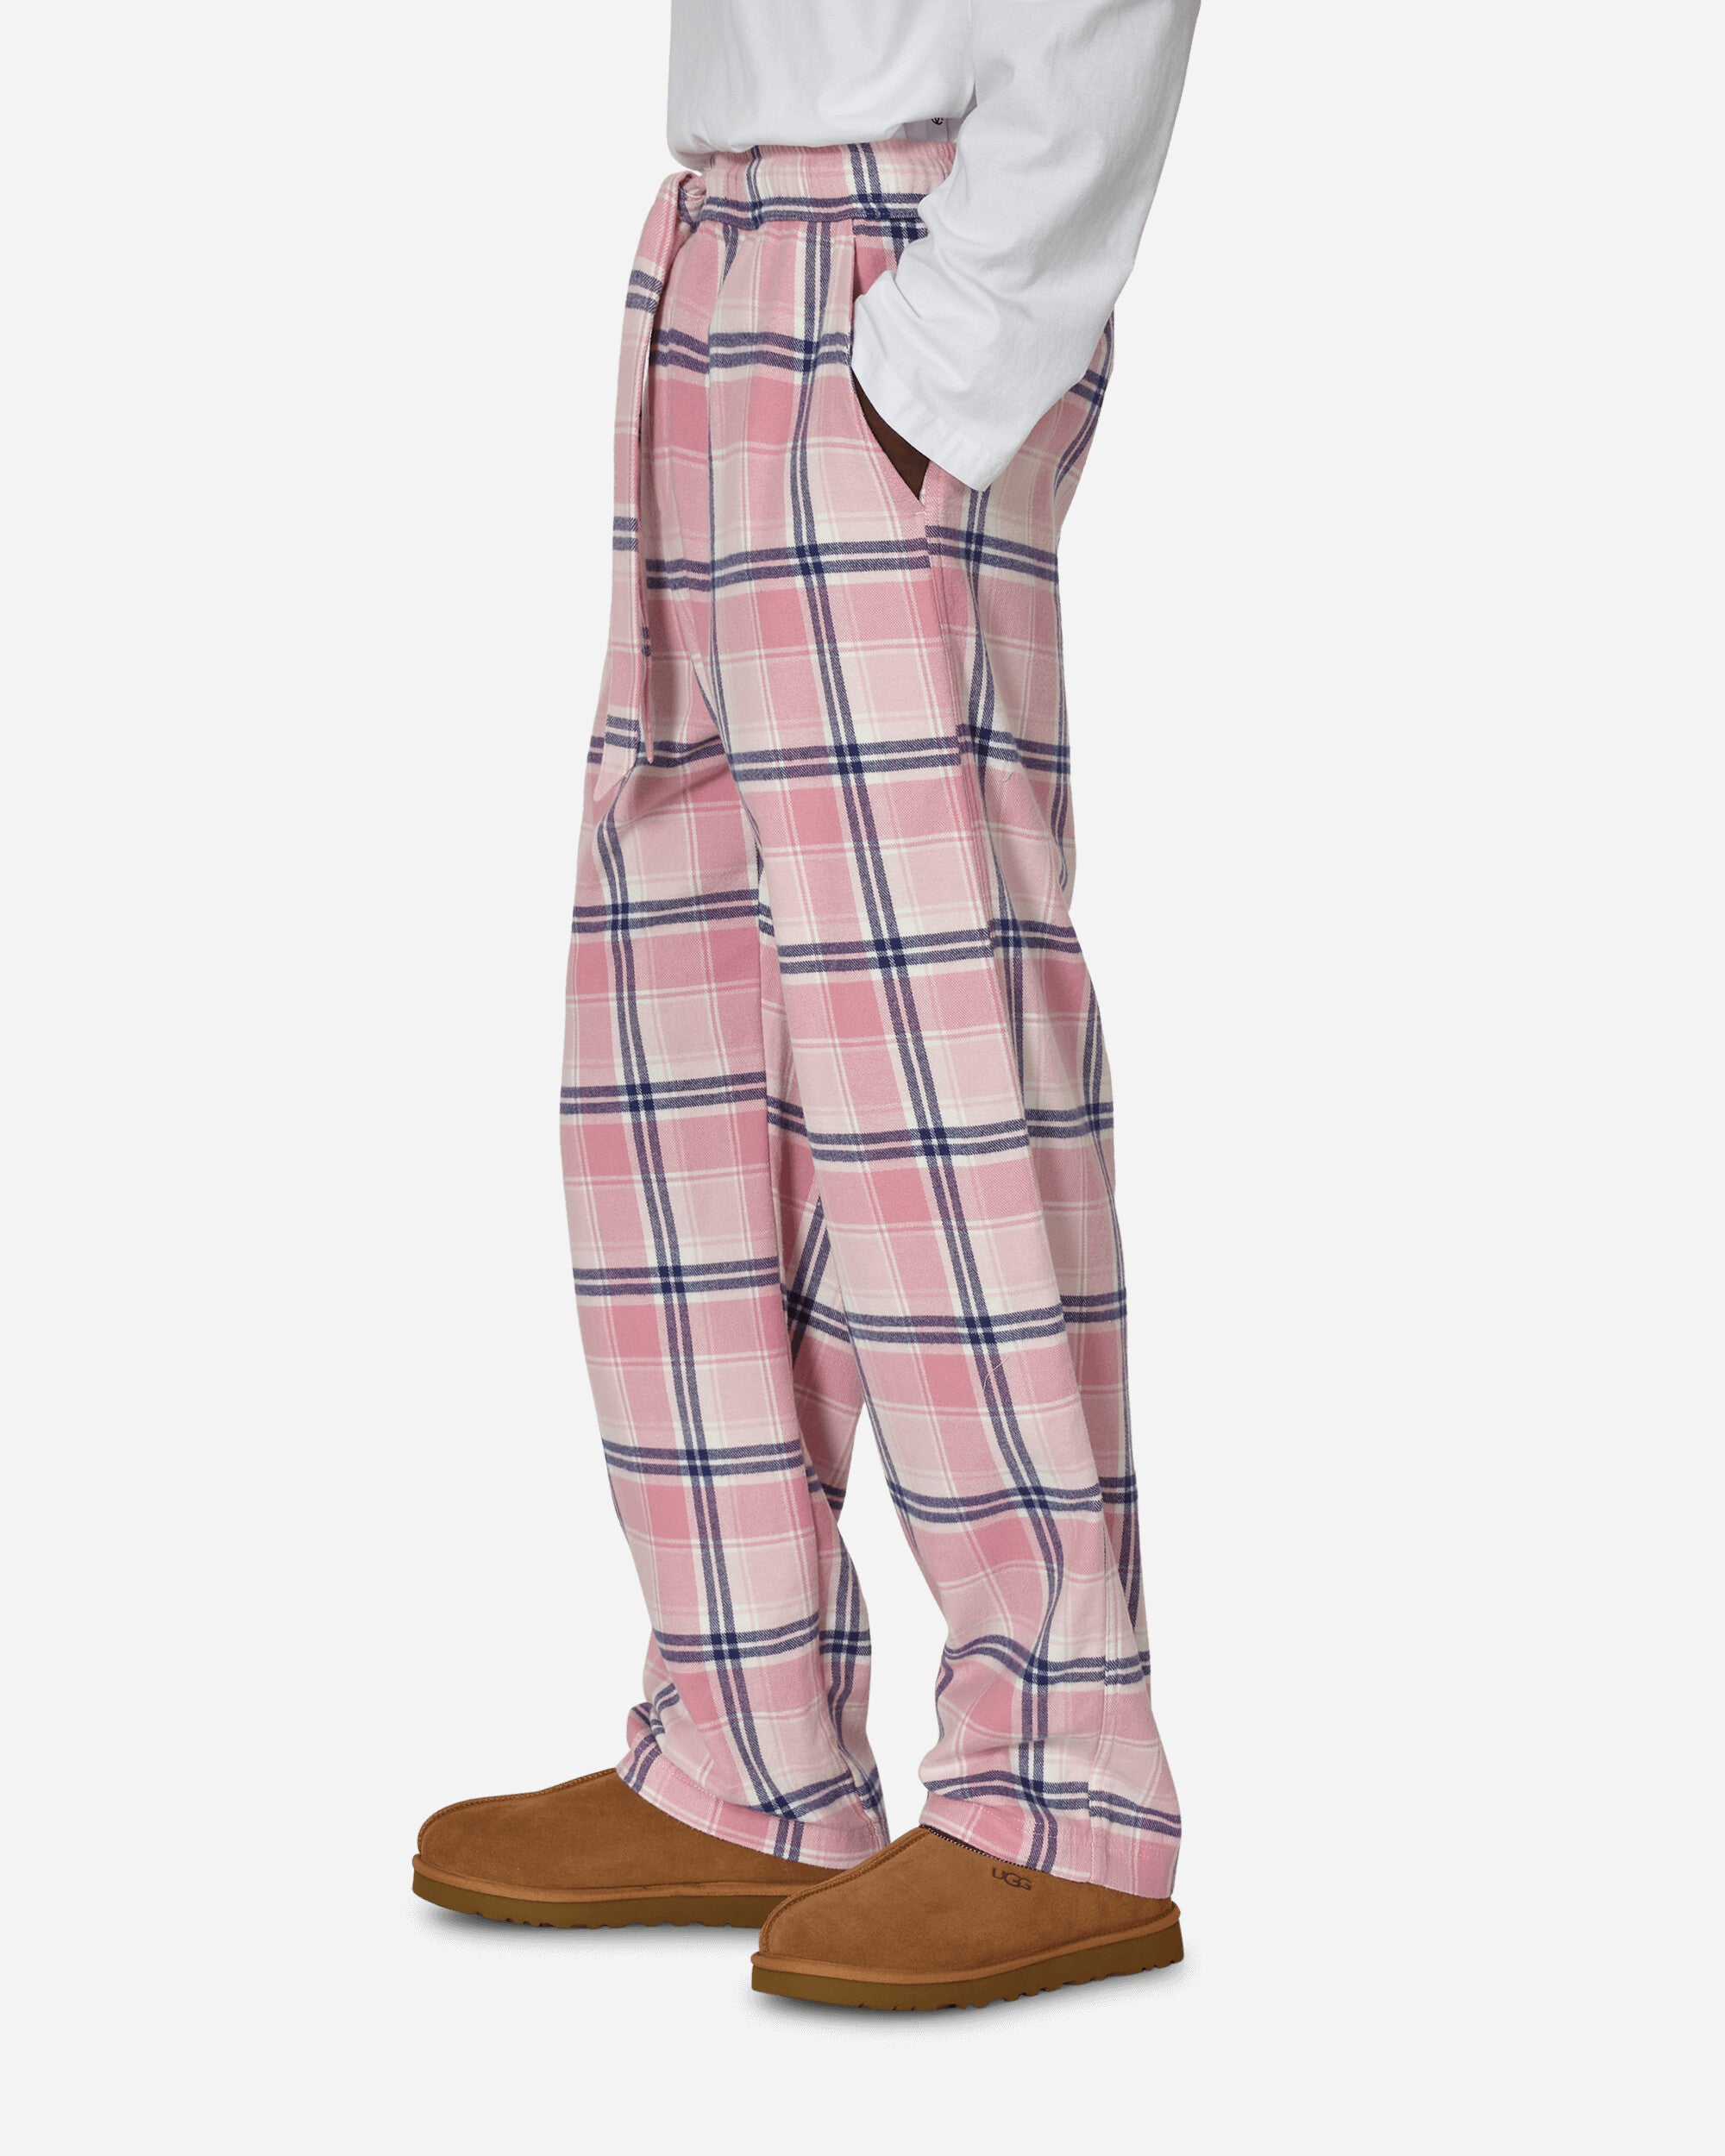 Tekla Pijama Flannel Pant Pink Plaid Underwear Pajamas SWP-PIPL PIPL